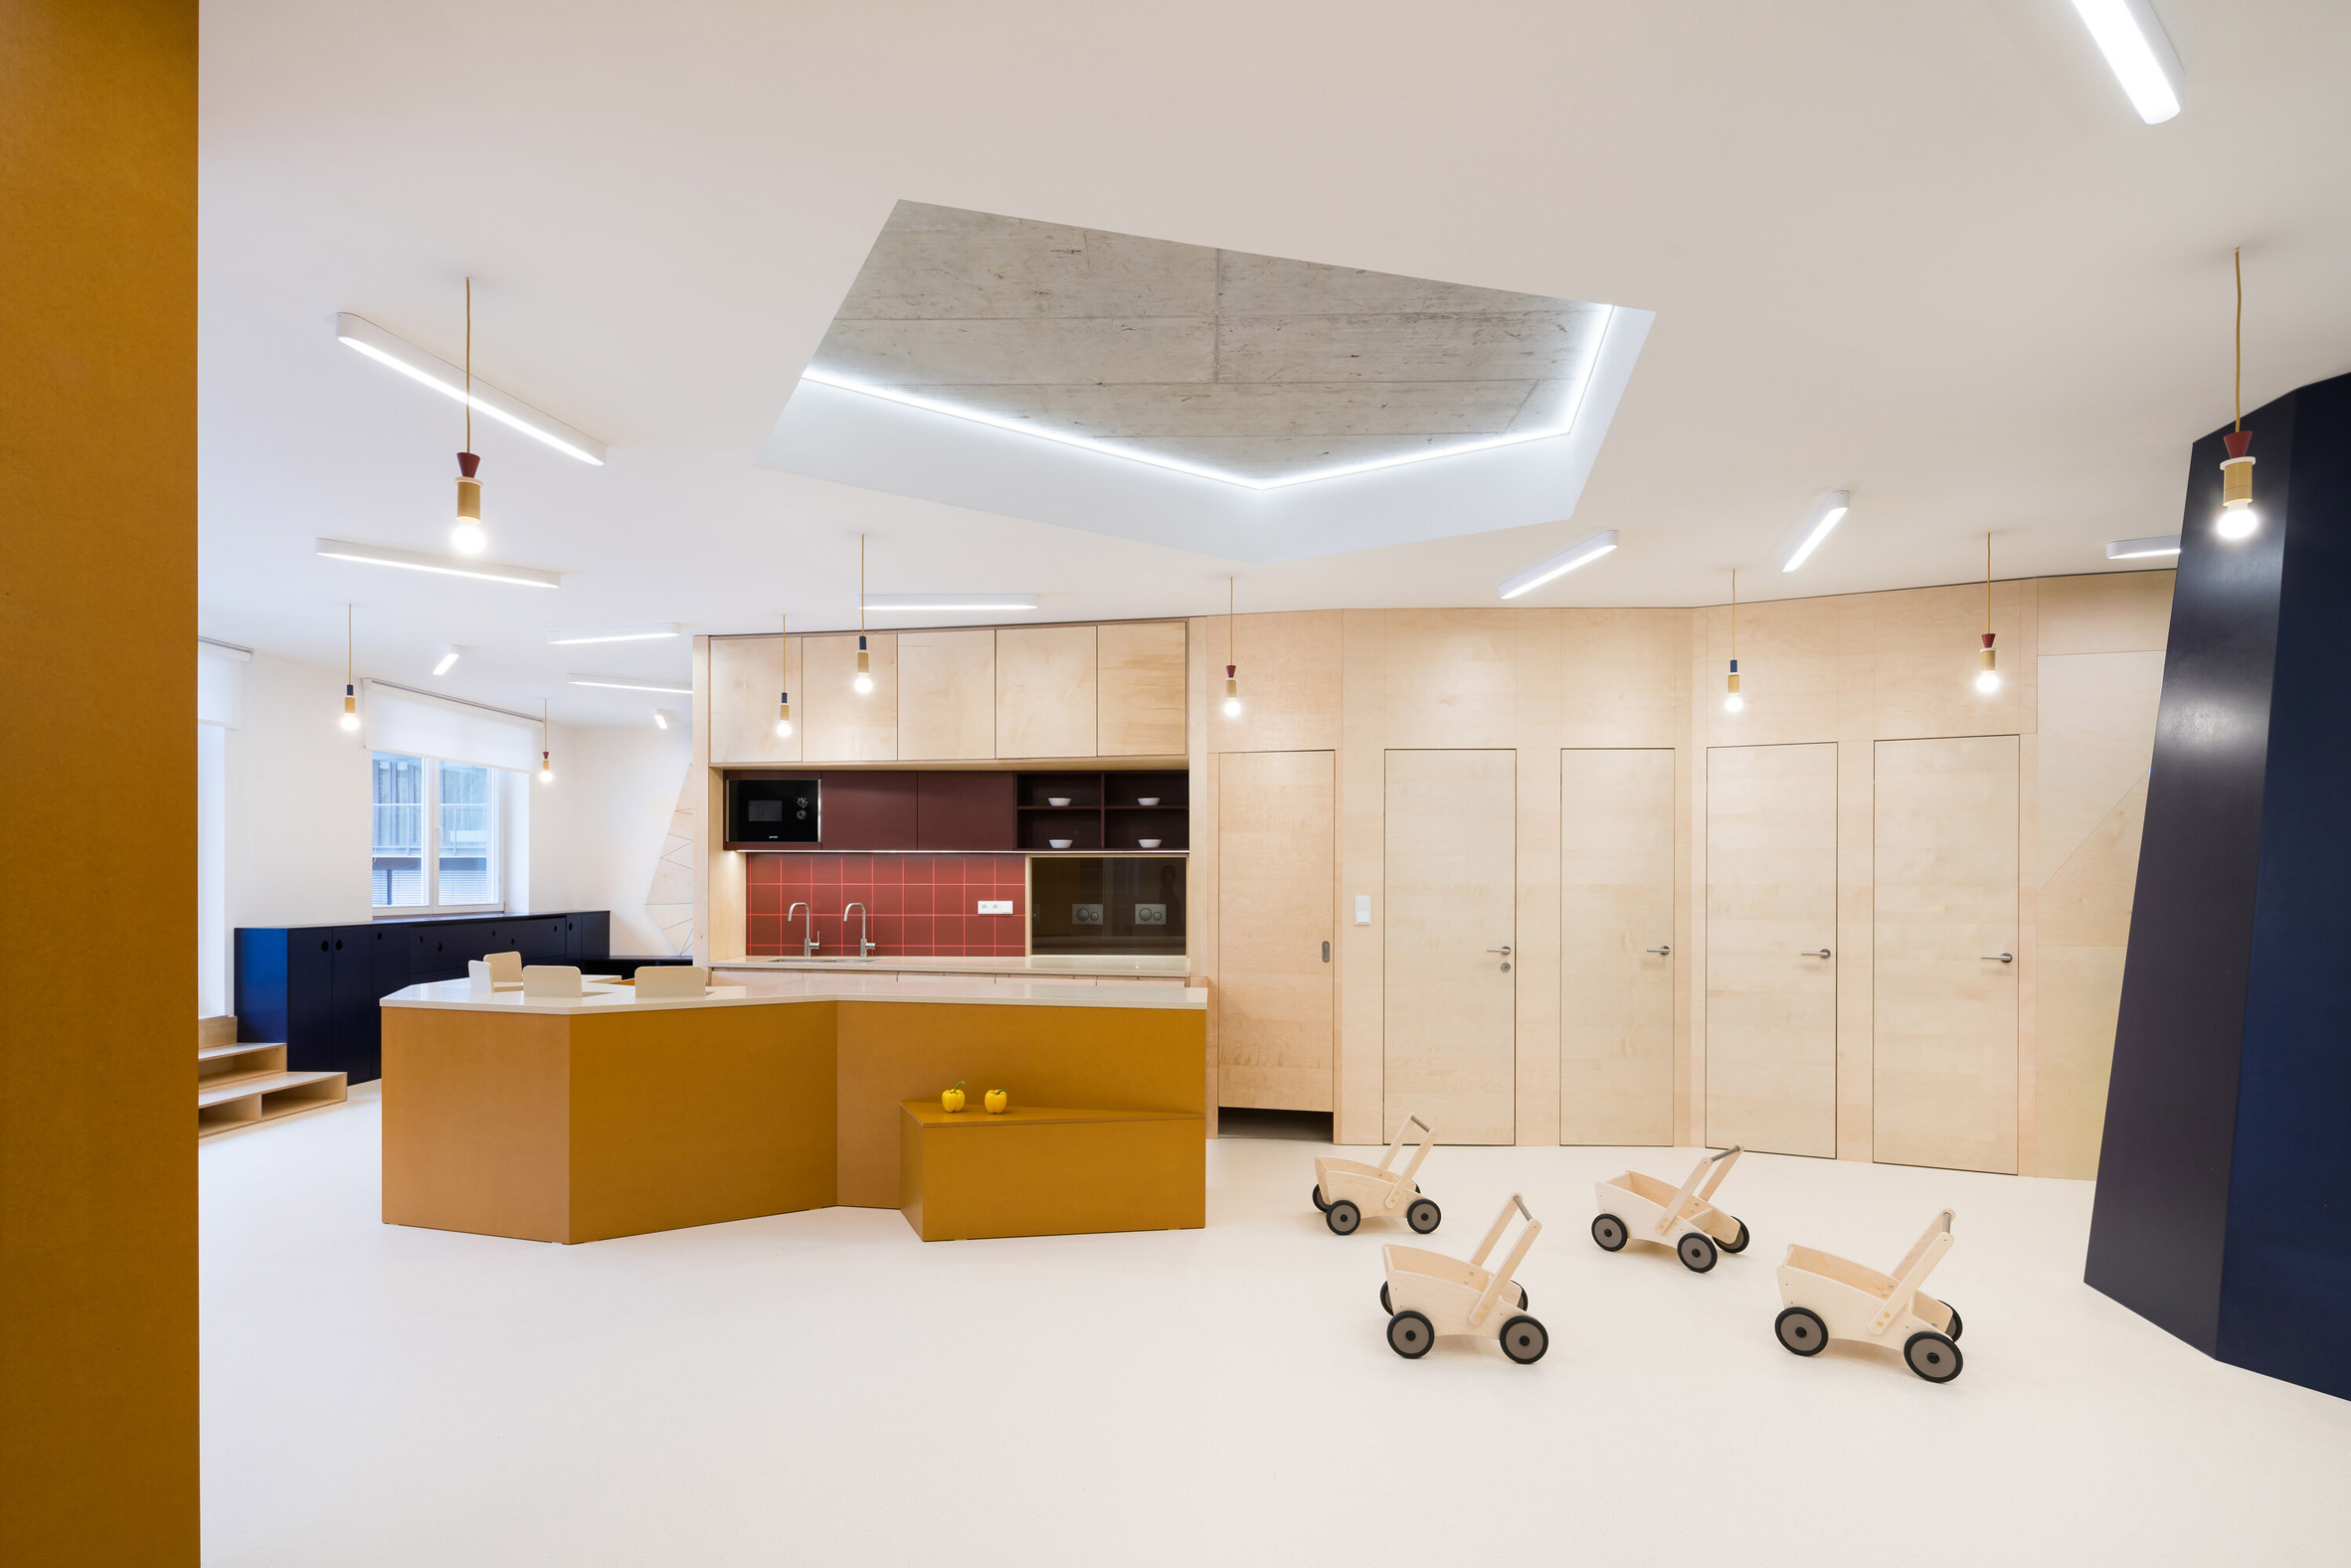  Kitchen location with plywood cladding in Prague kindergarten by No Architects